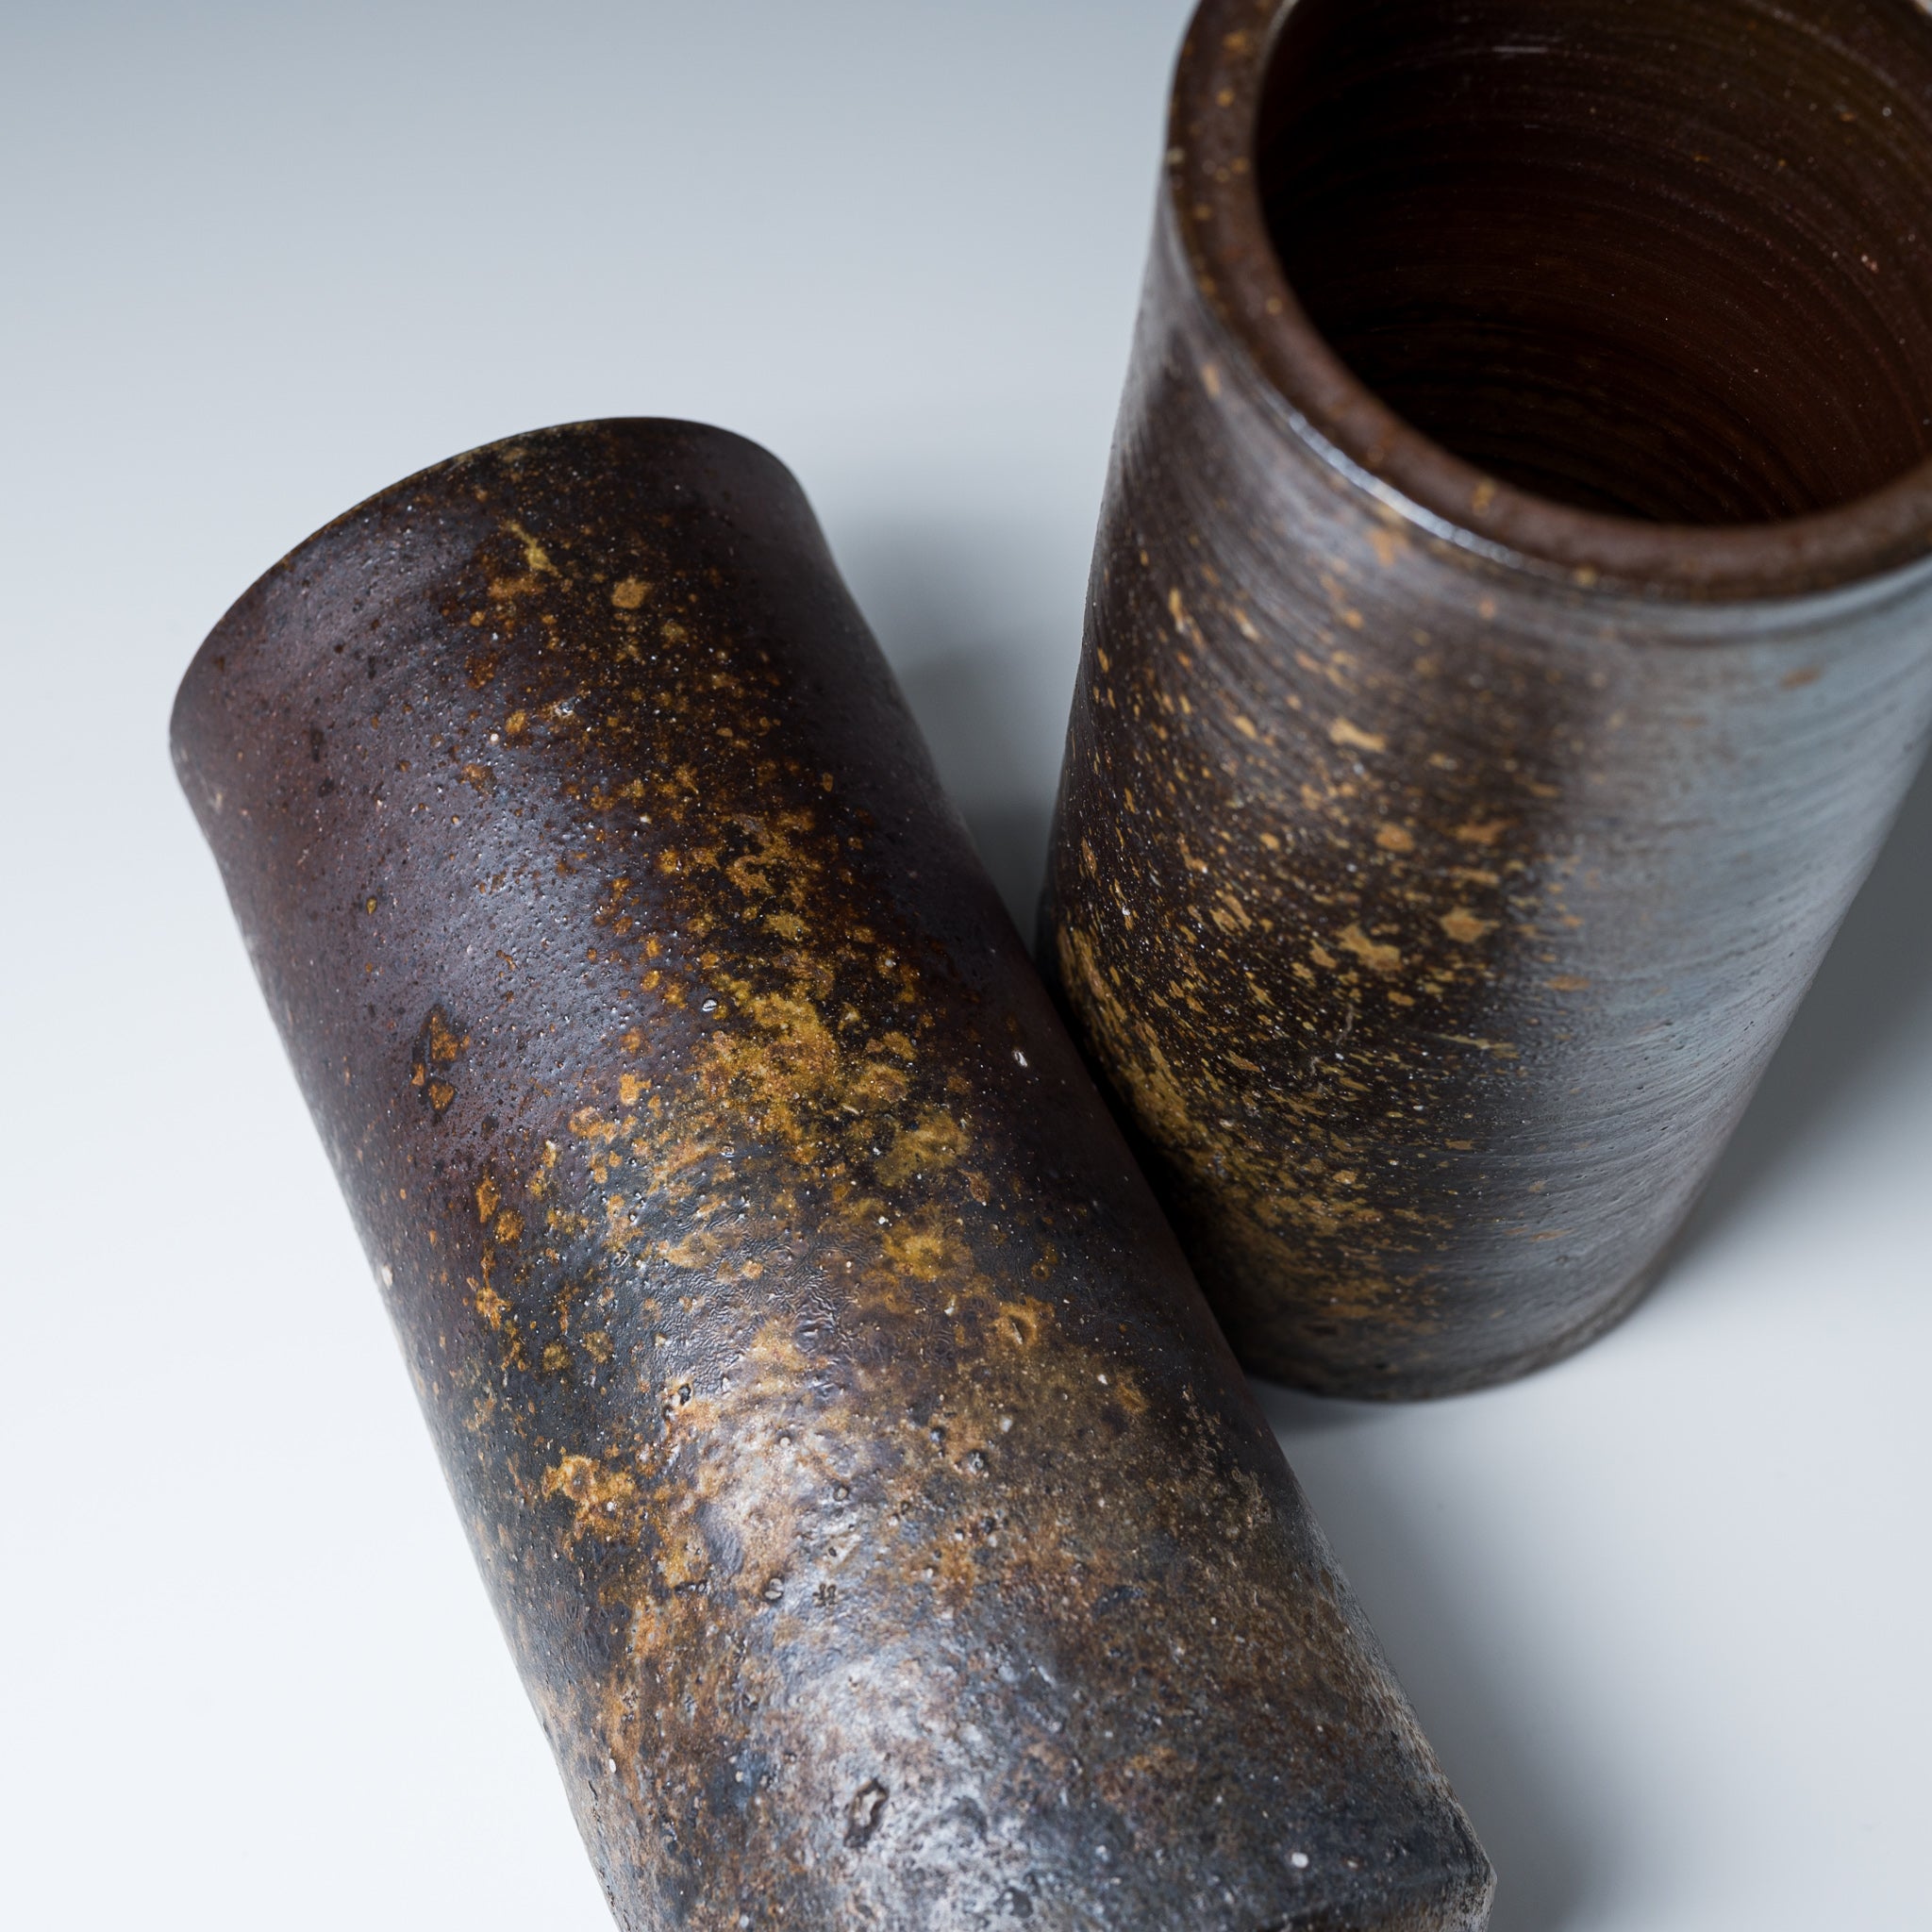 Bizen Pottery Vase with Wooden Box - Goma / 備前焼 花入